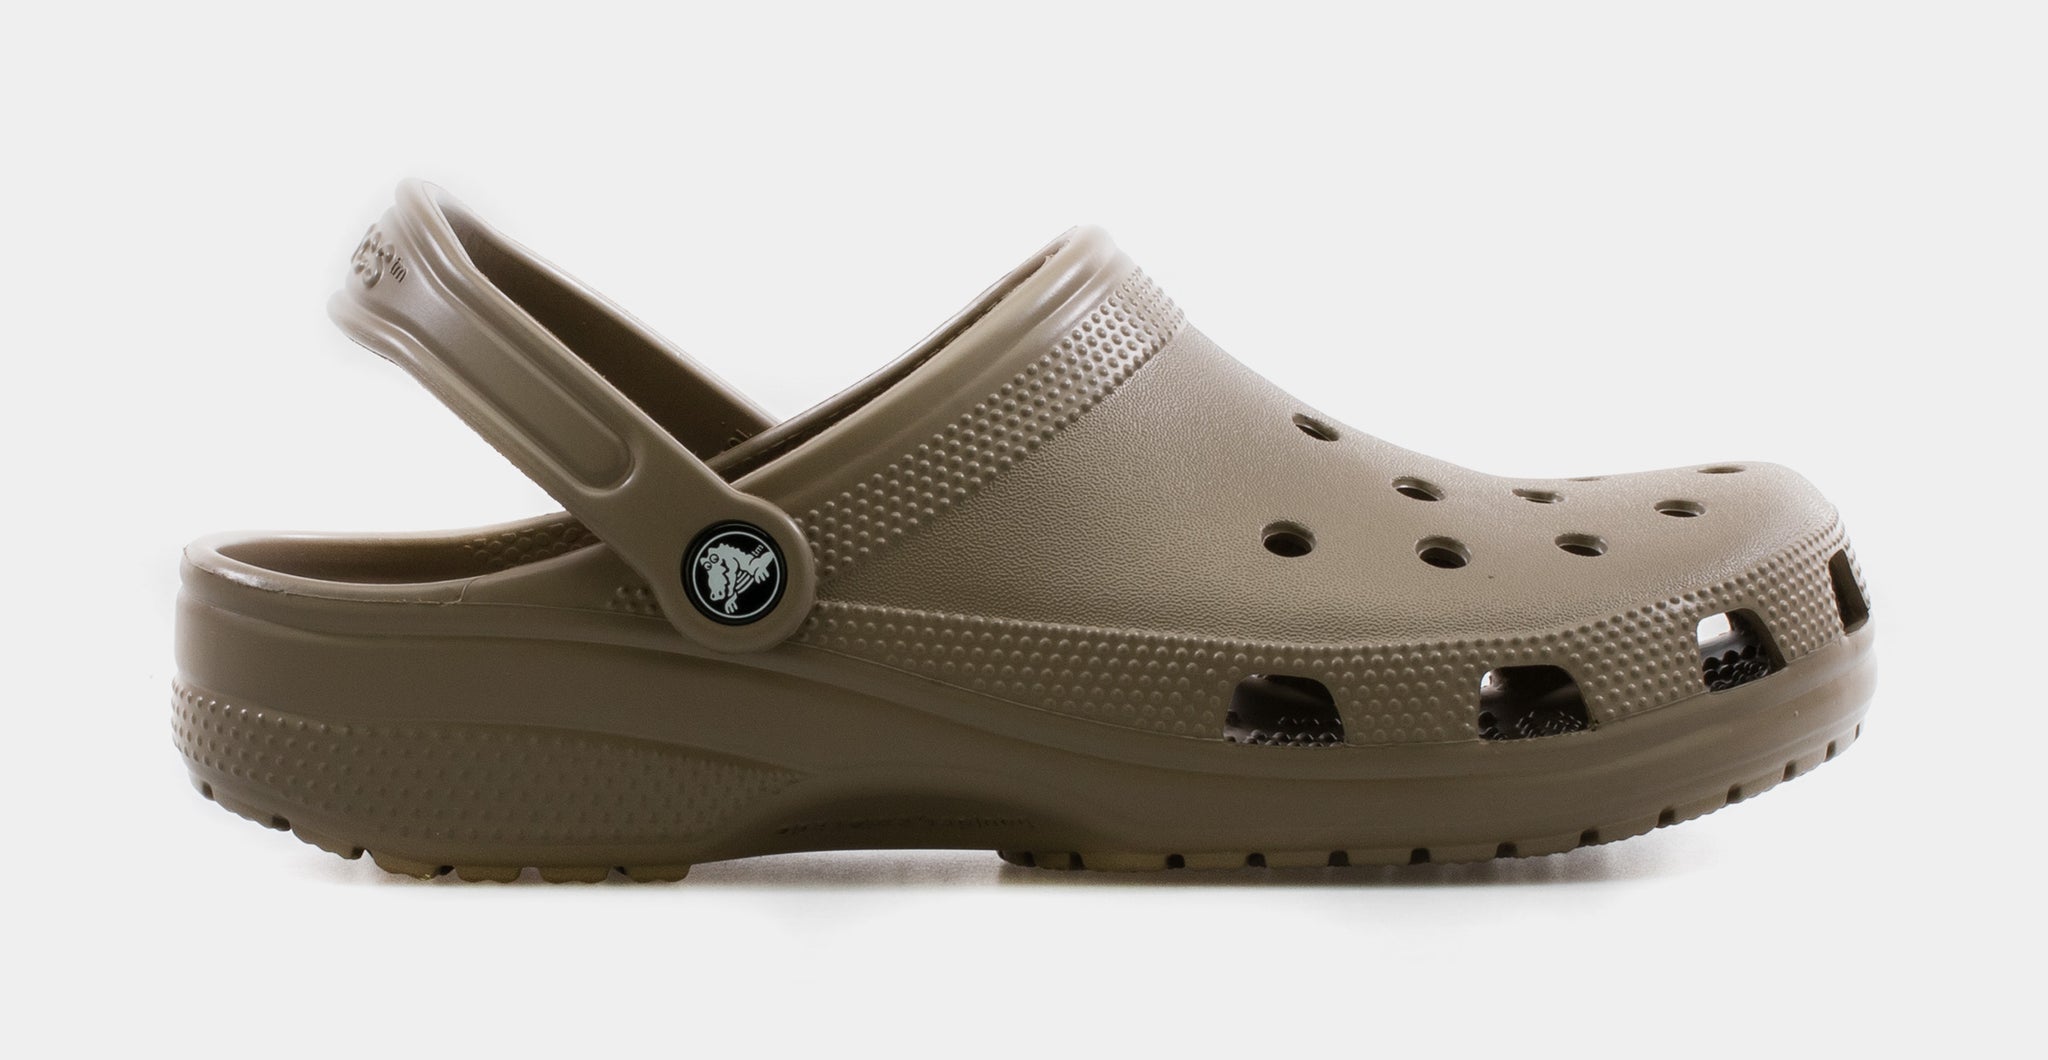 Share 56+ images of crocs sandals super hot